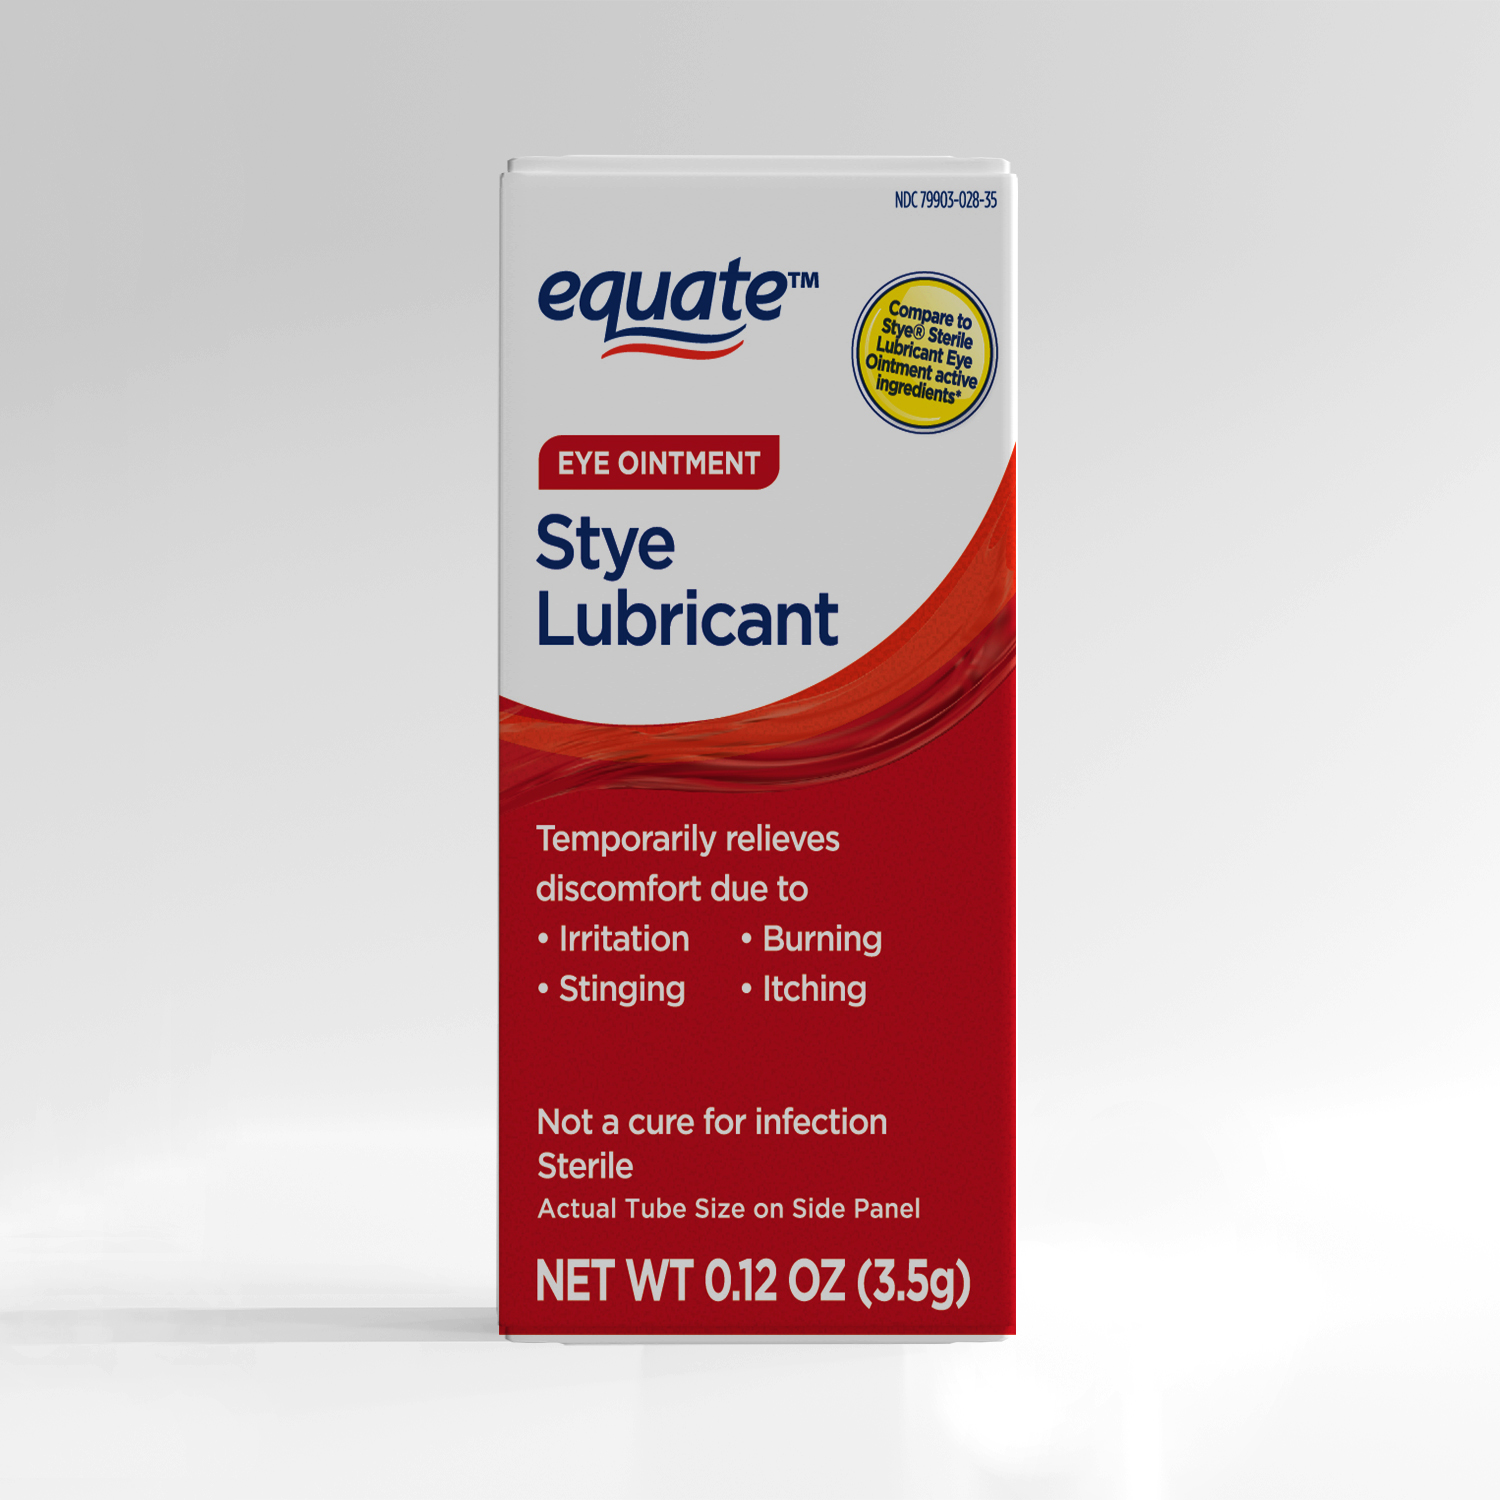 Equate Stye Lubricant Eye Ointment